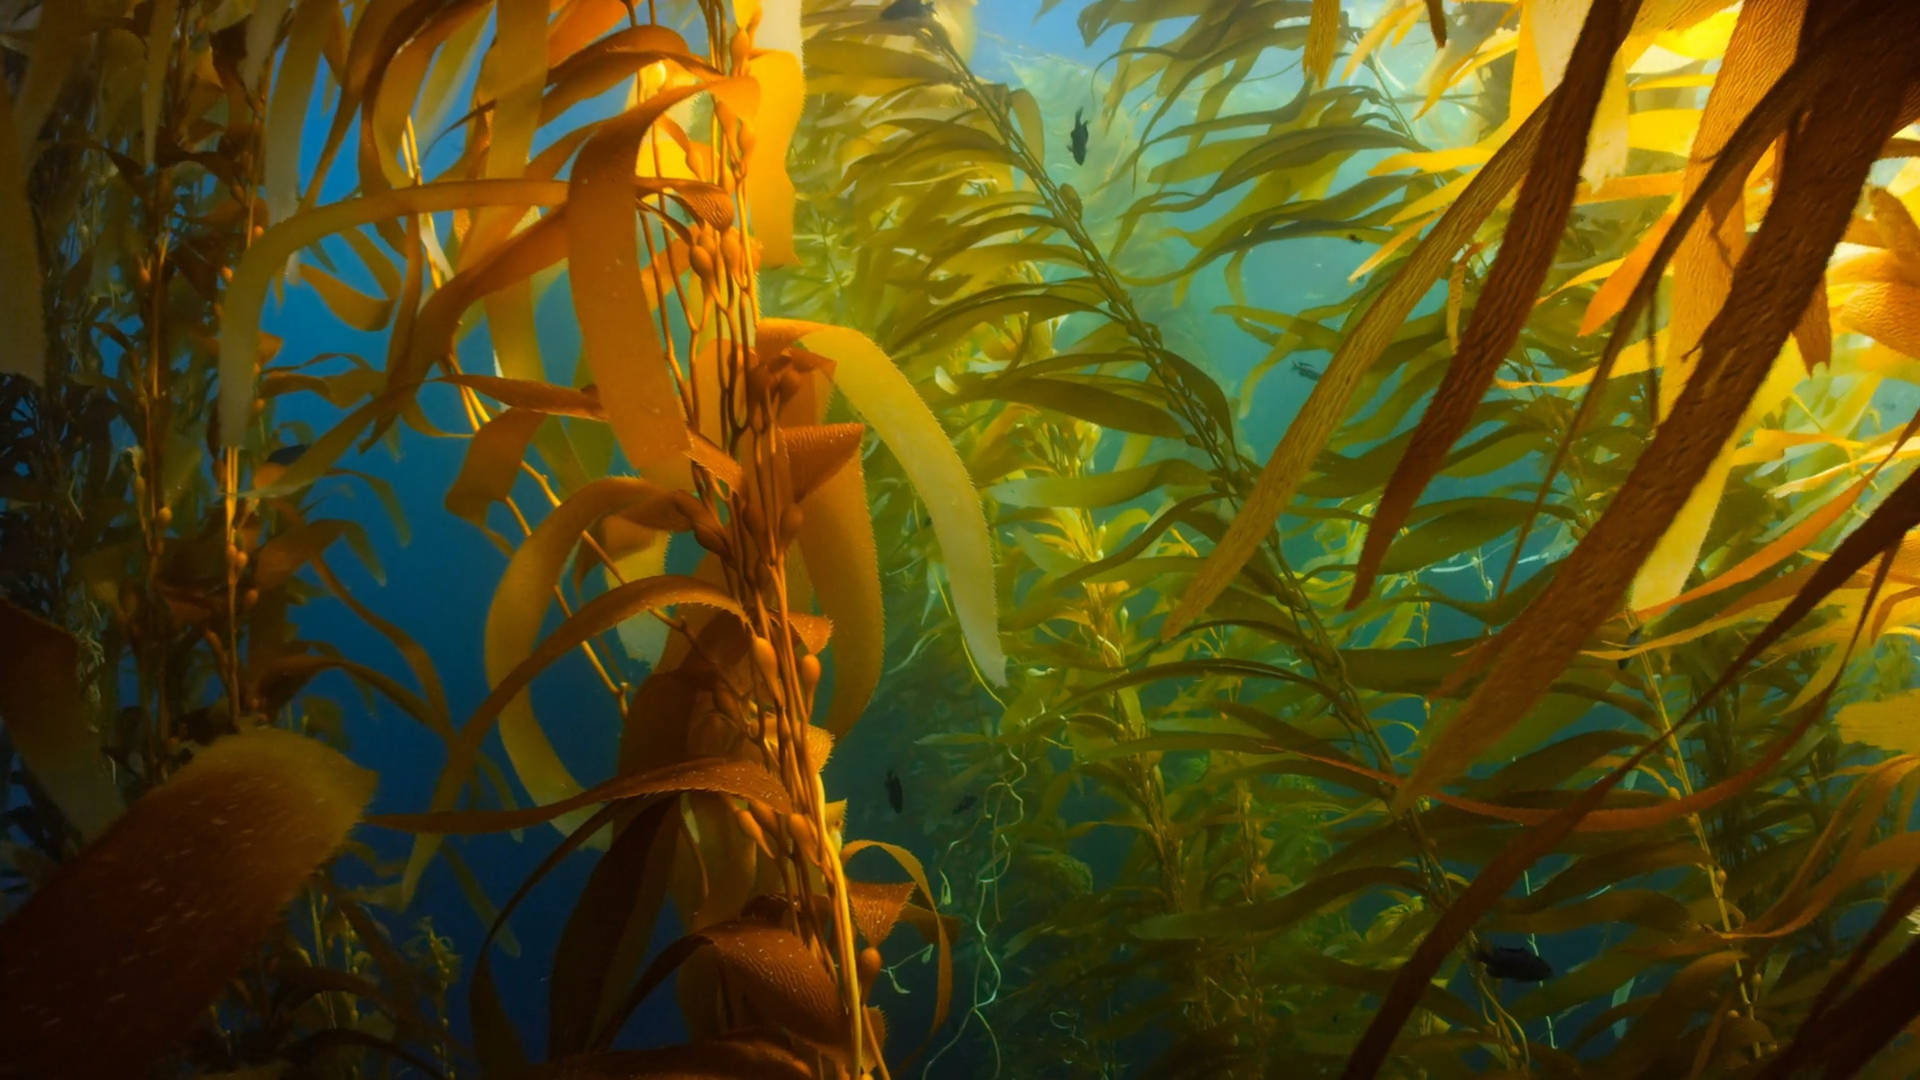 kelp forest wallpaper